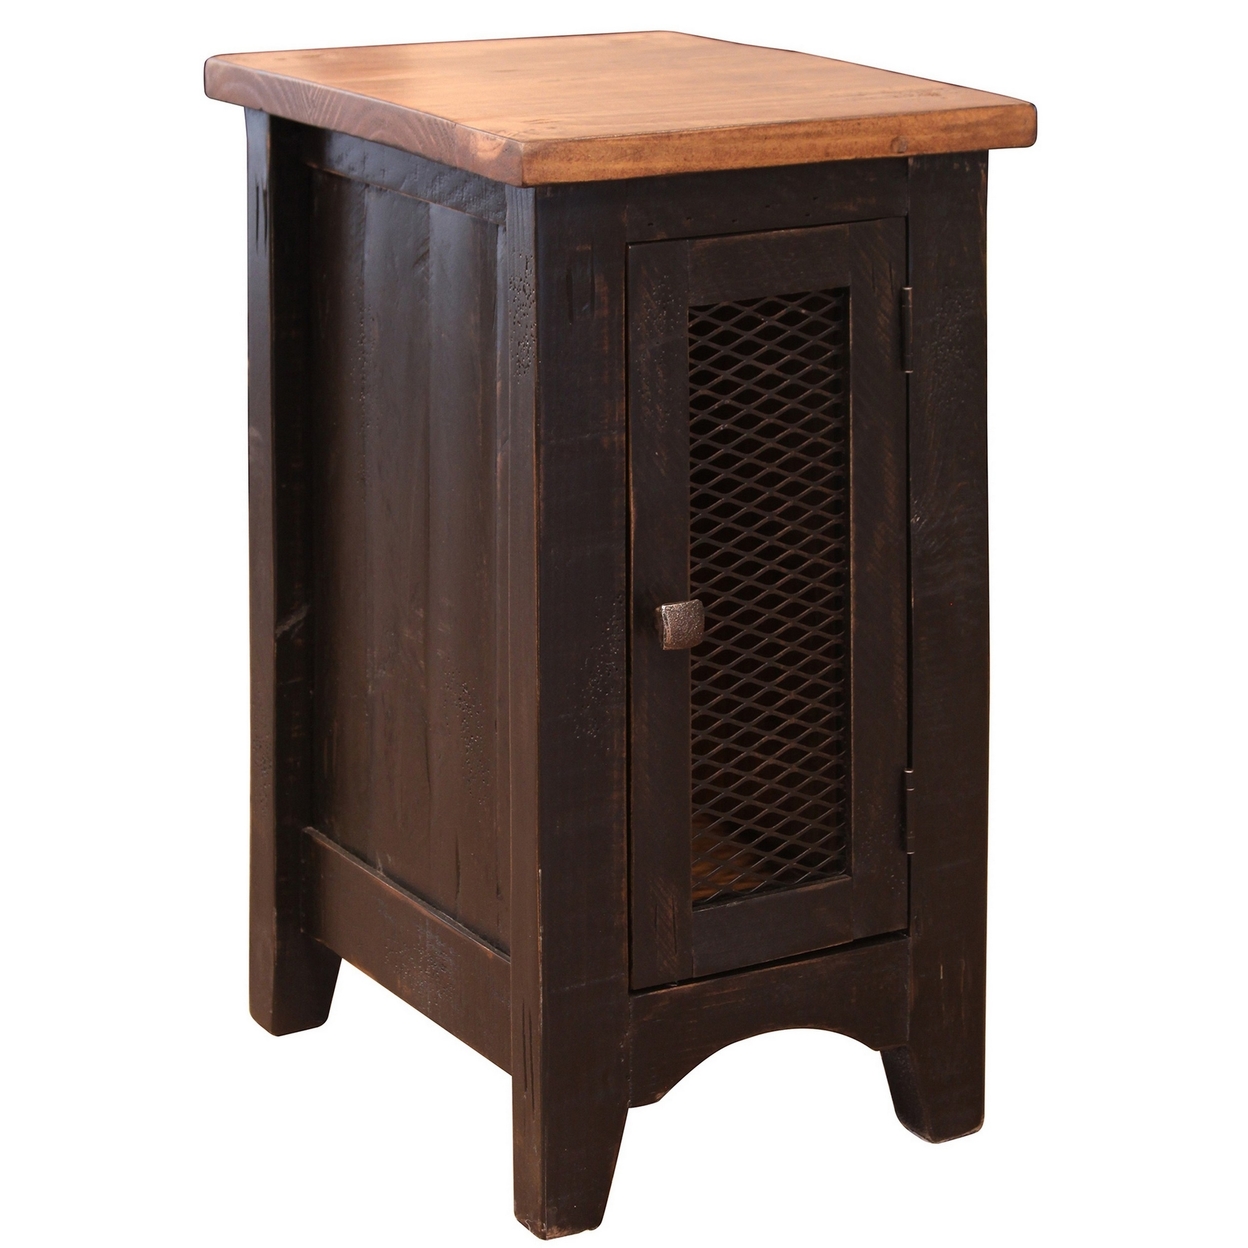 Ata 26 Inch Chairside Table With Mesh Door, Solid Pine Wood, Brown, Black- Saltoro Sherpi